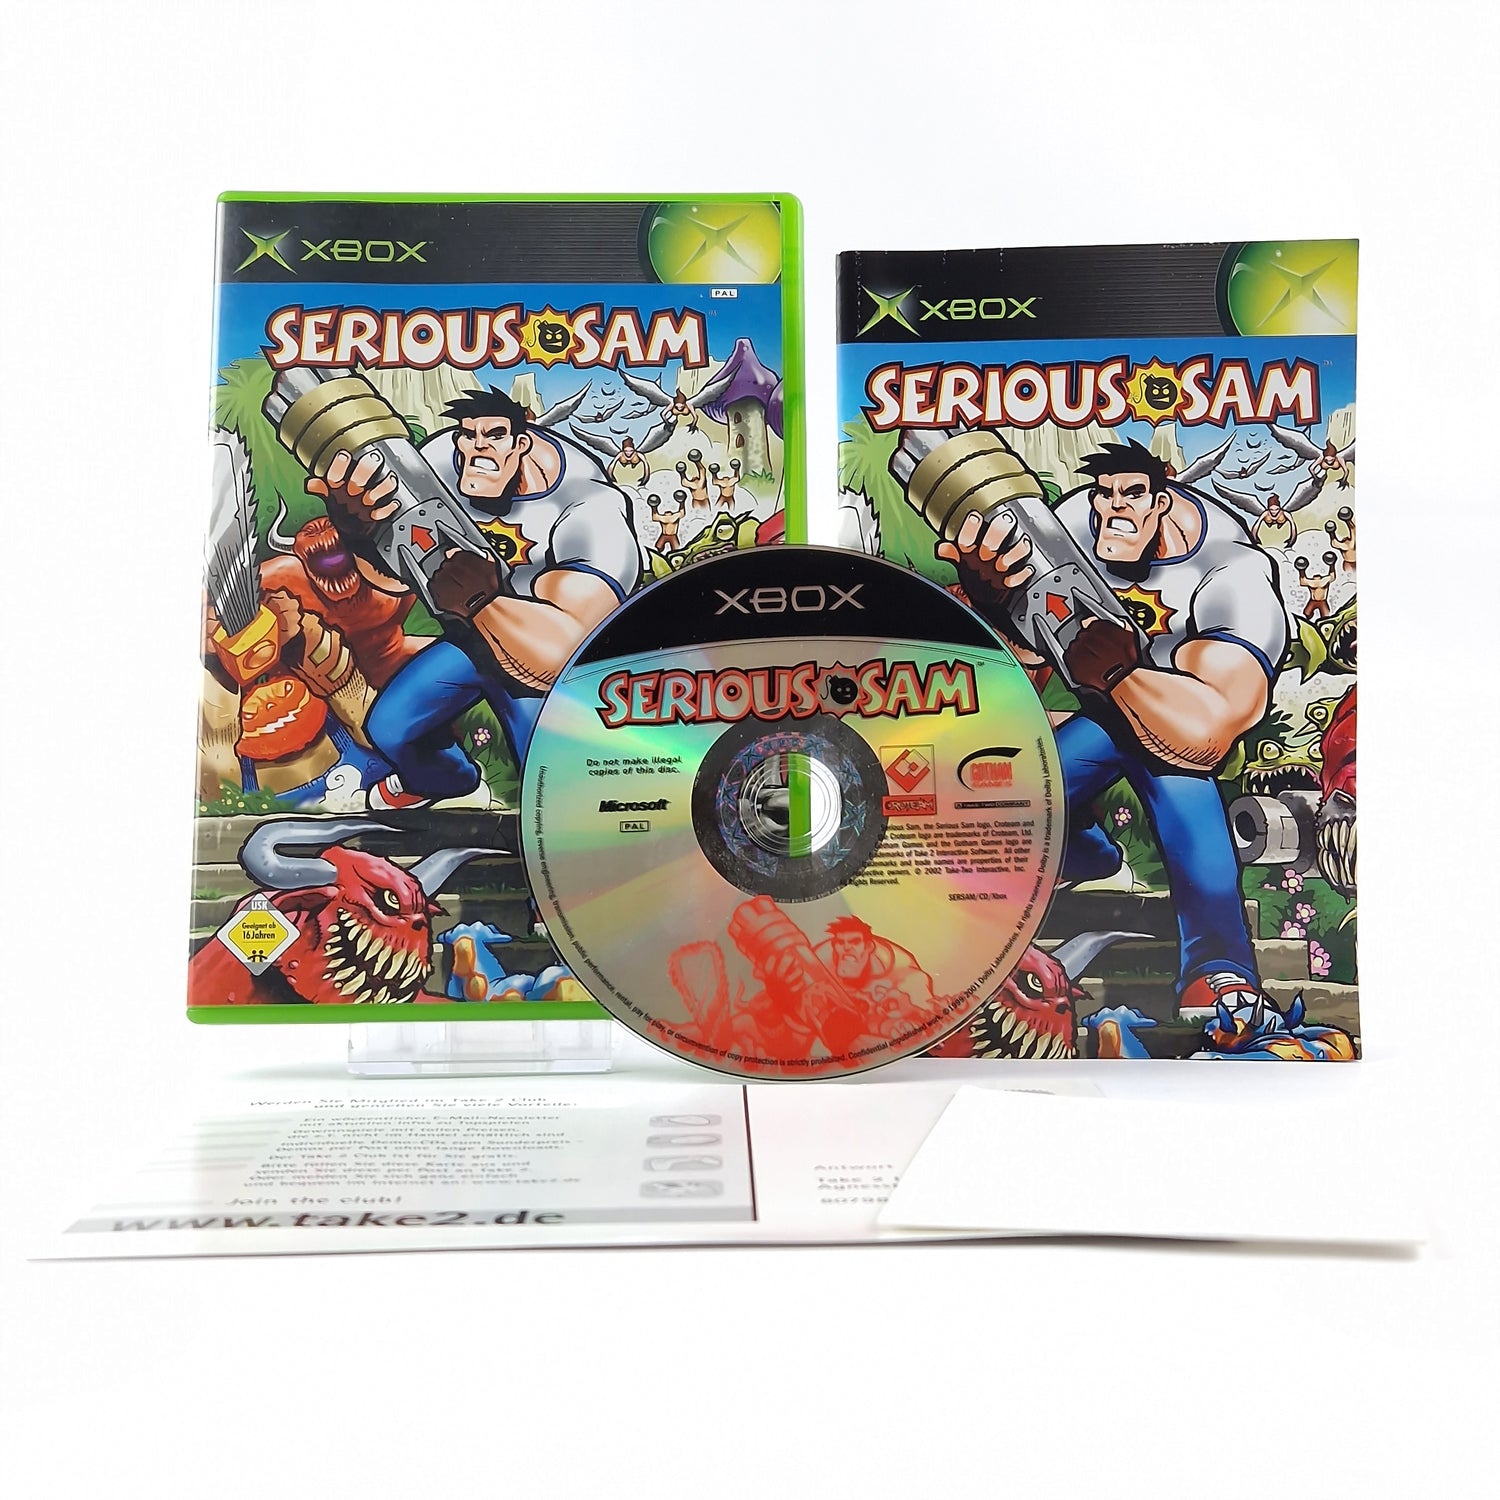 Microsoft Xbox Classic Game: Serious Sam - OVP Instructions CD | German PAL version